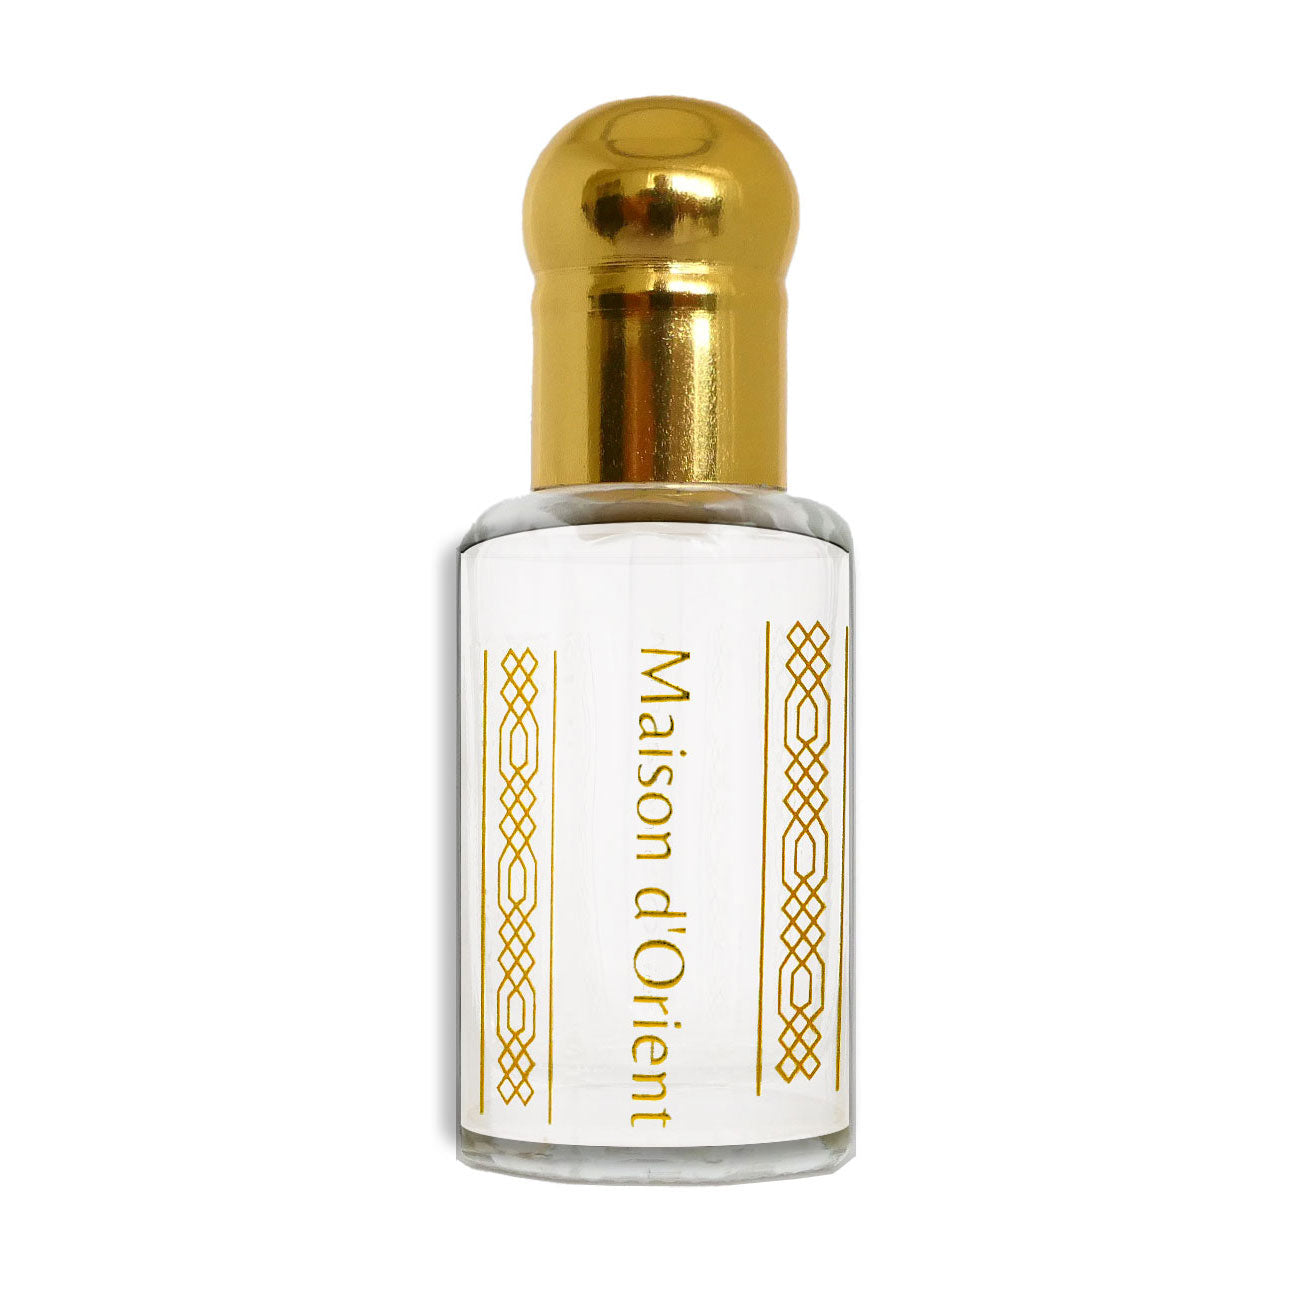 Musk Oil Musk Oil Perfume, Natural - 0.5 fl oz